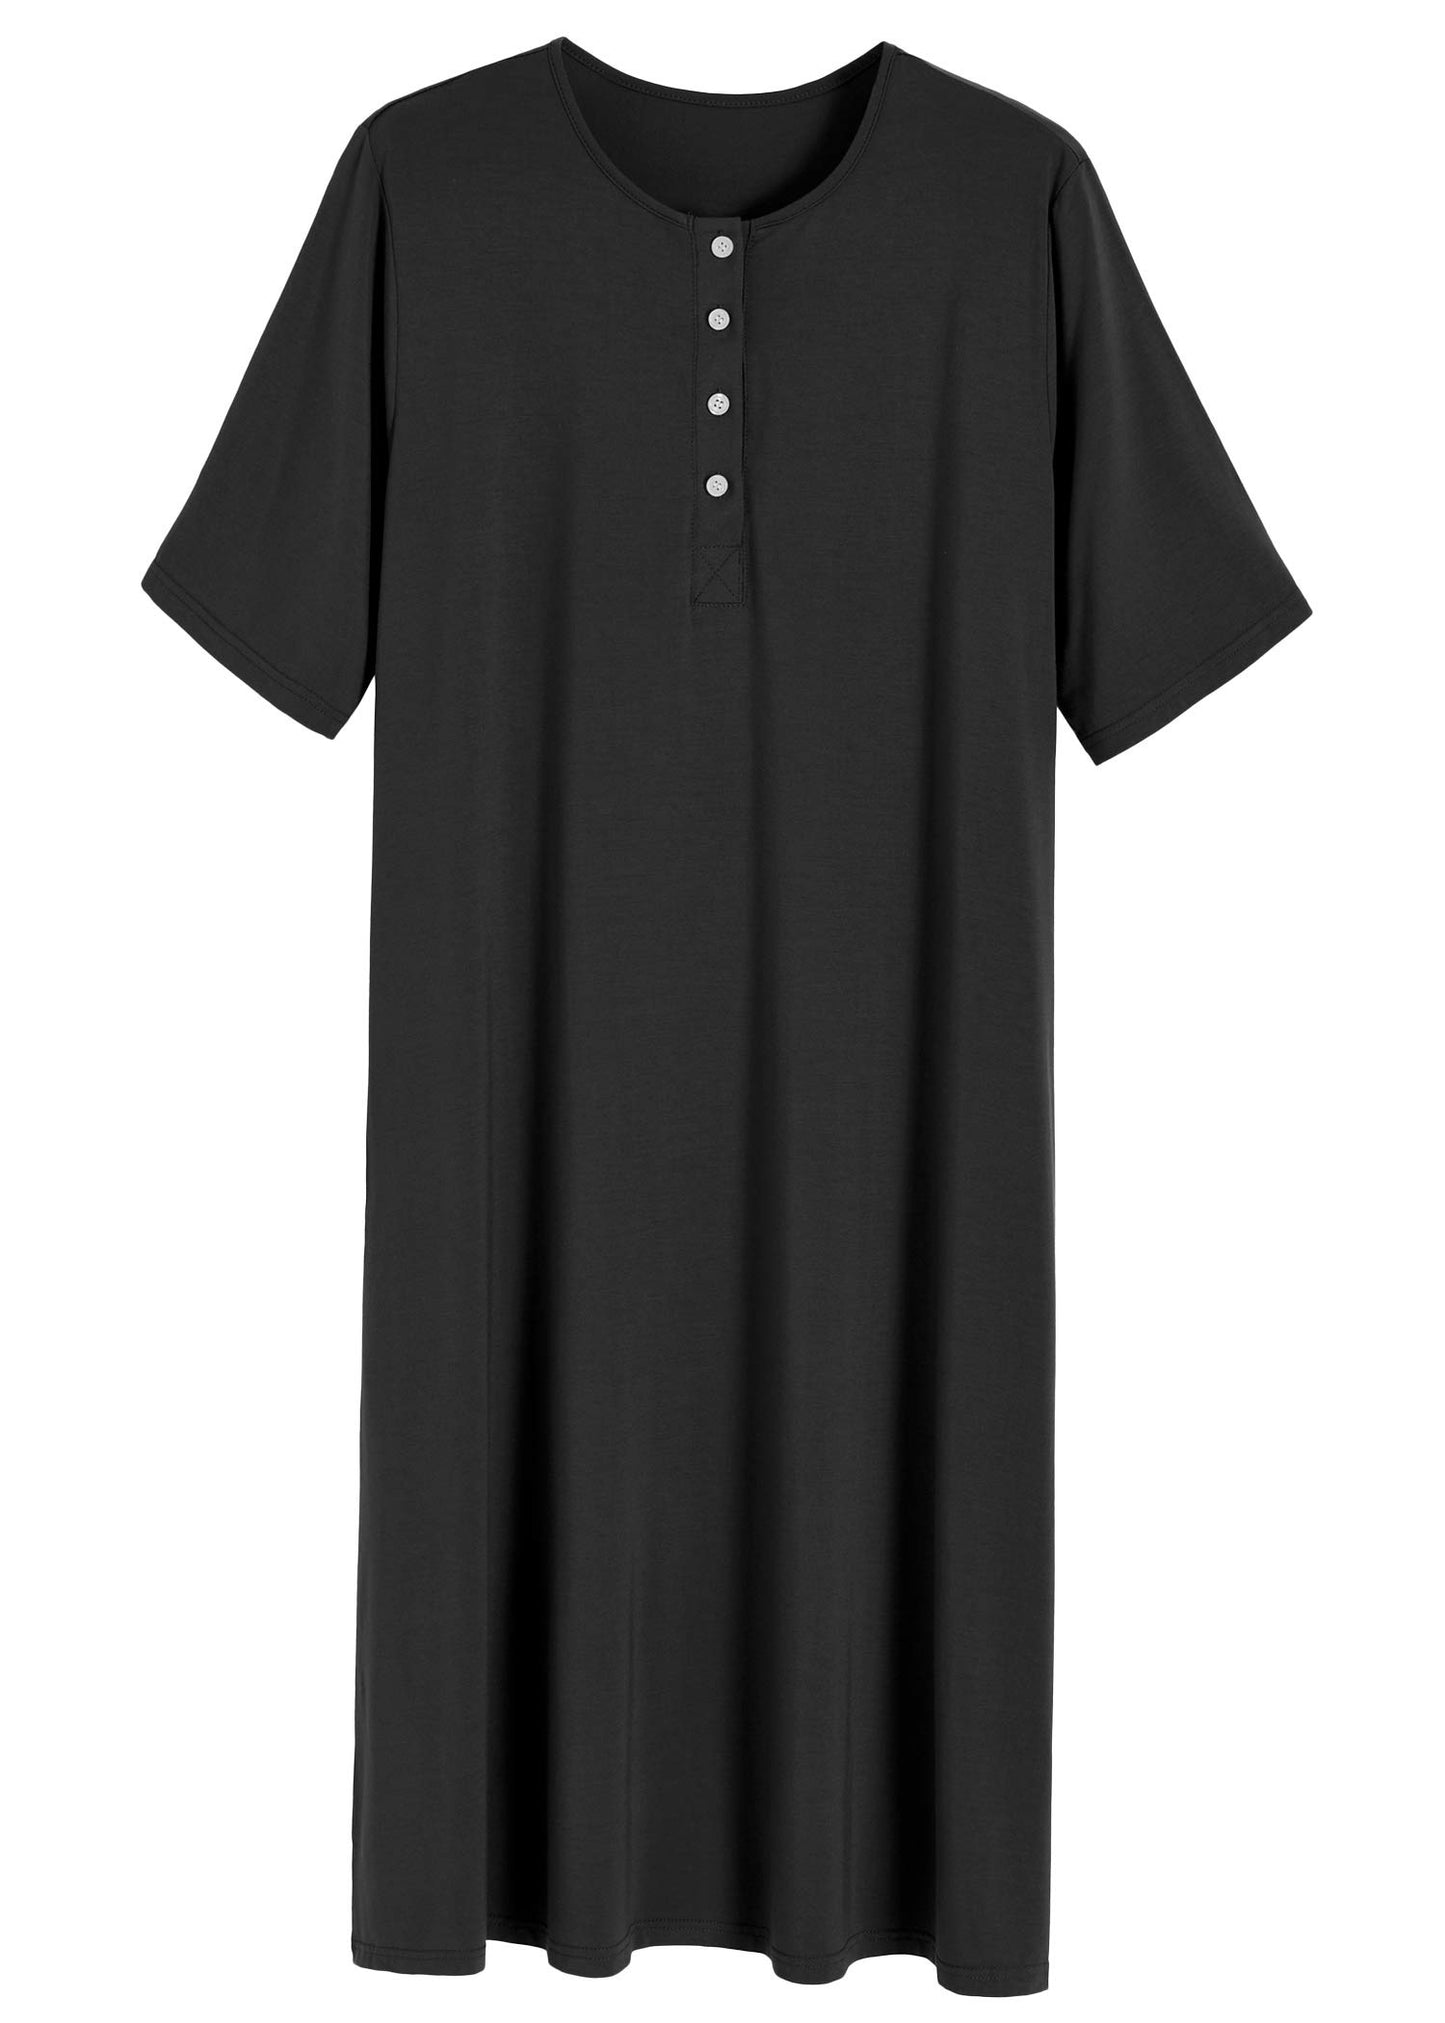 Women's Long Sleep Shirt Henley Nightshirt with Pockets - Latuza